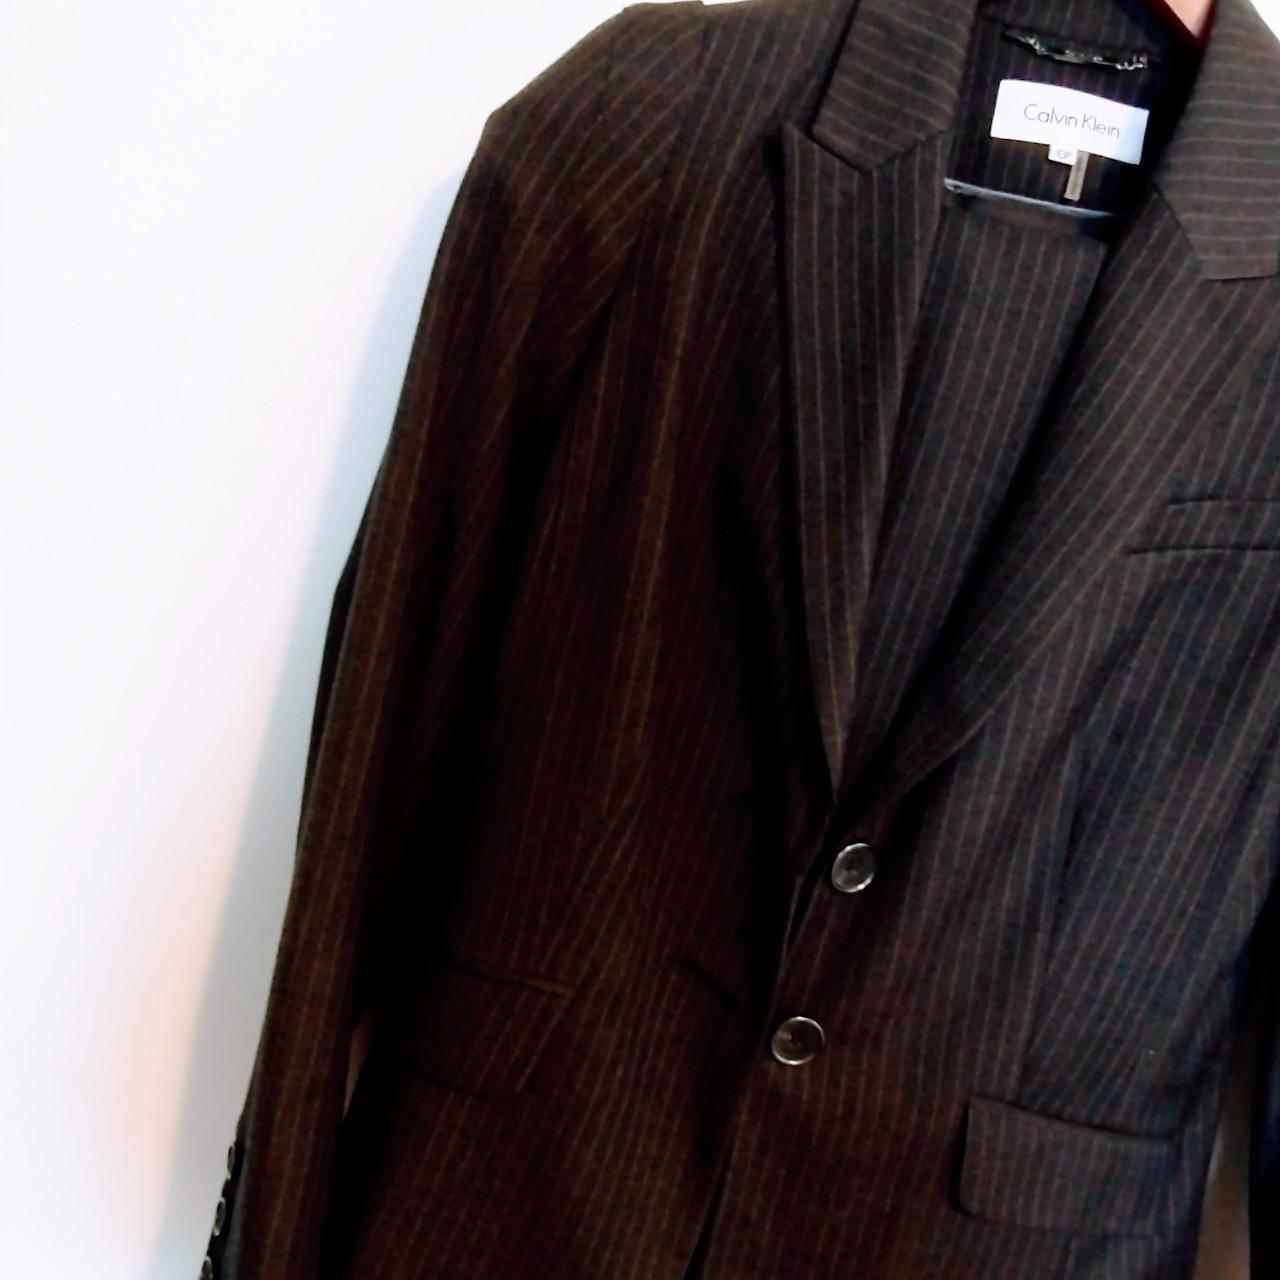 NWT Calvin Klein suit set, size 10 petite. Matching